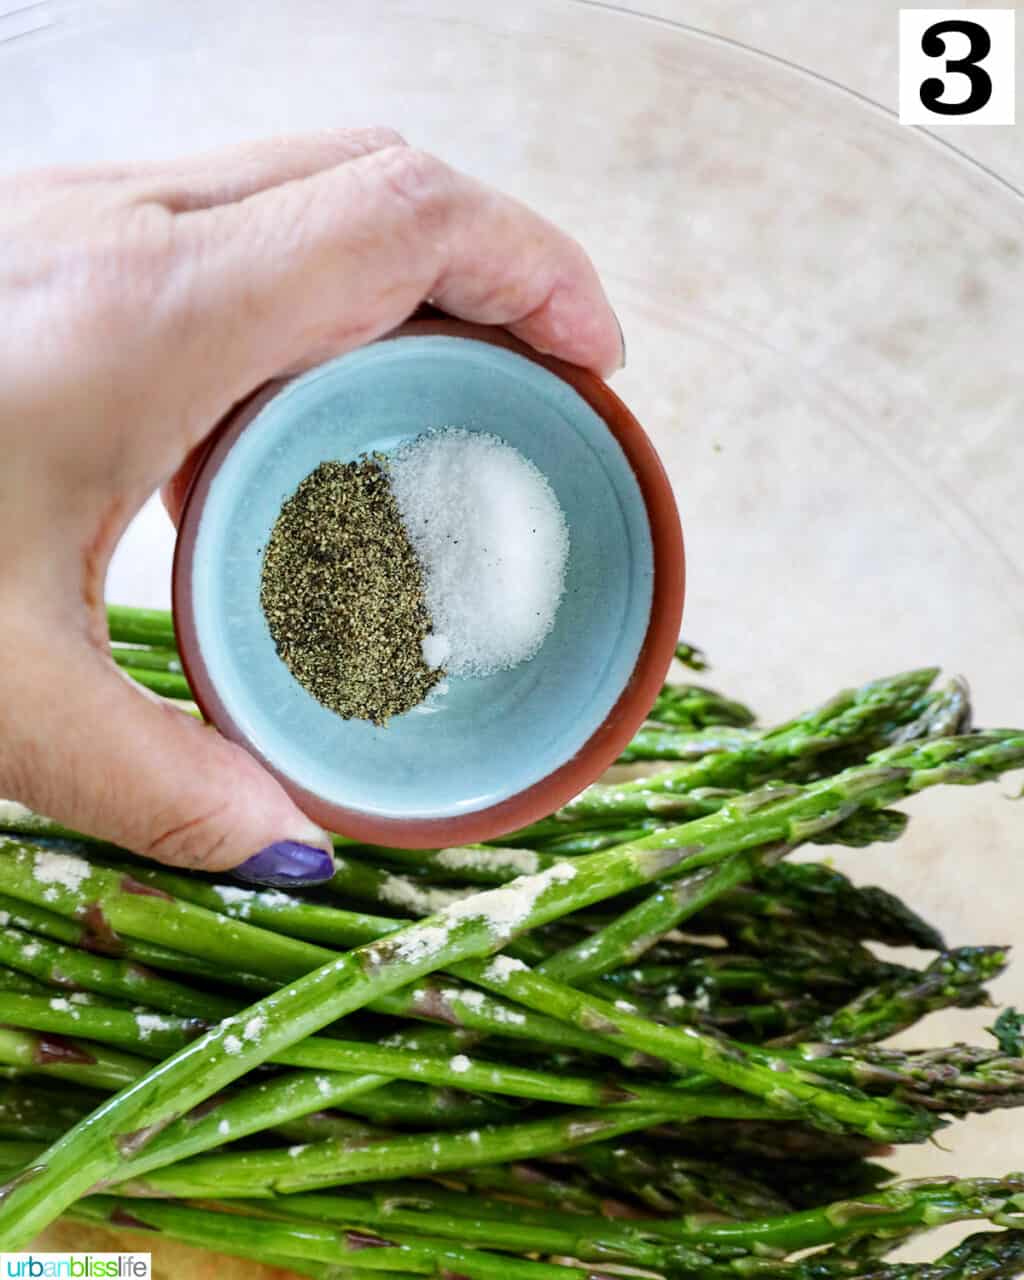 hand holding salt and pepper over asparagus.